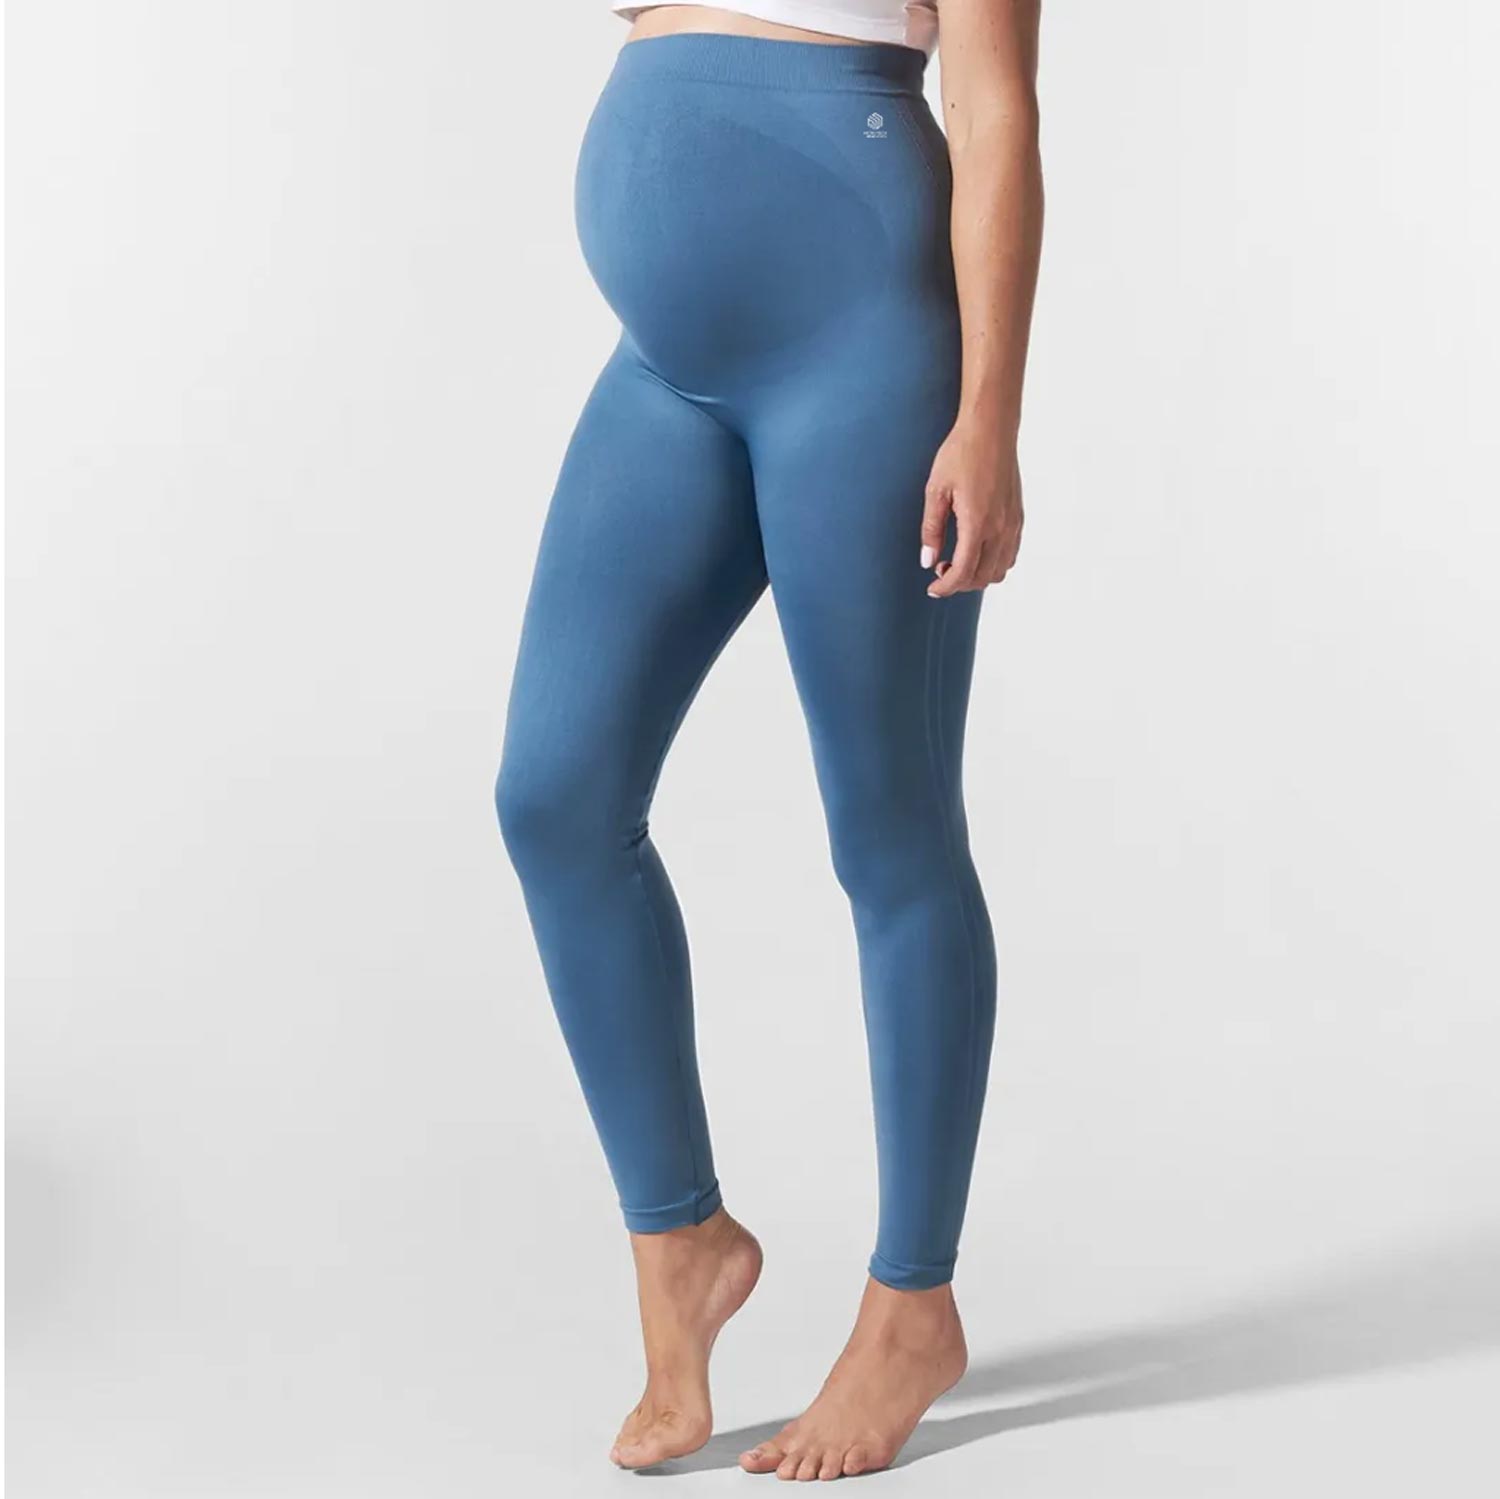 Maternity Yoga Pants - Microtech Sports